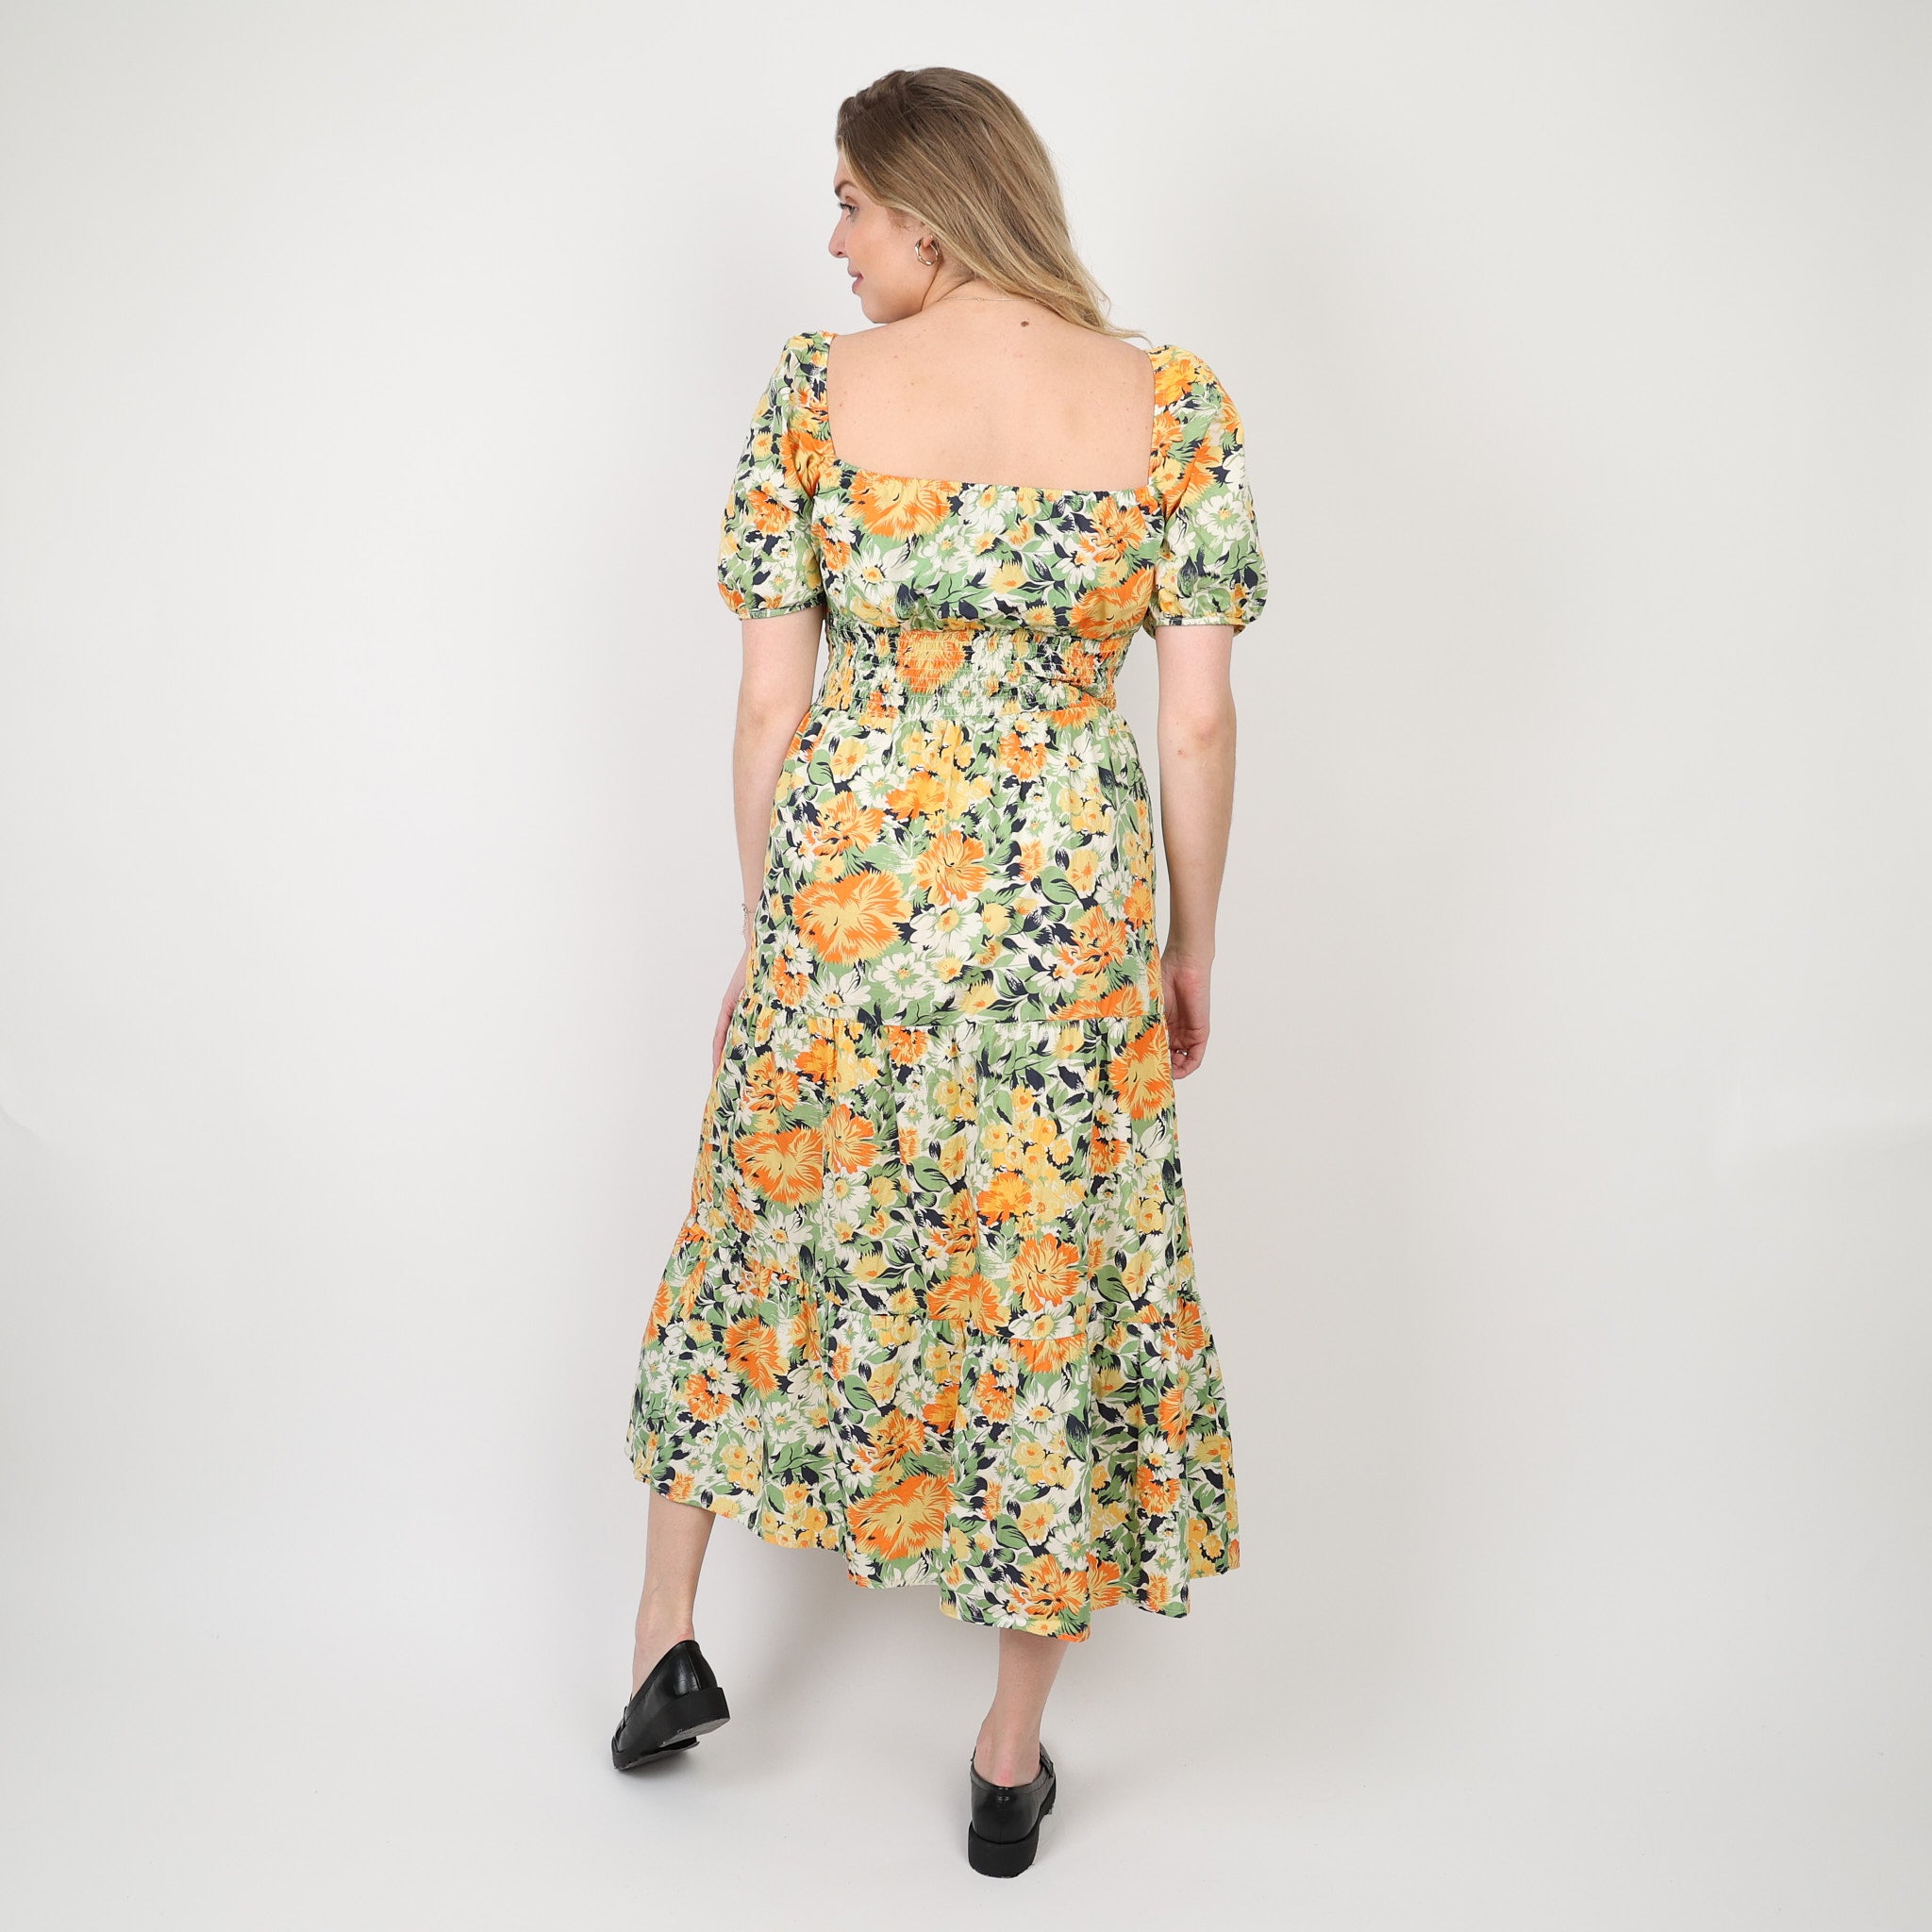 Dress, UK Size 14